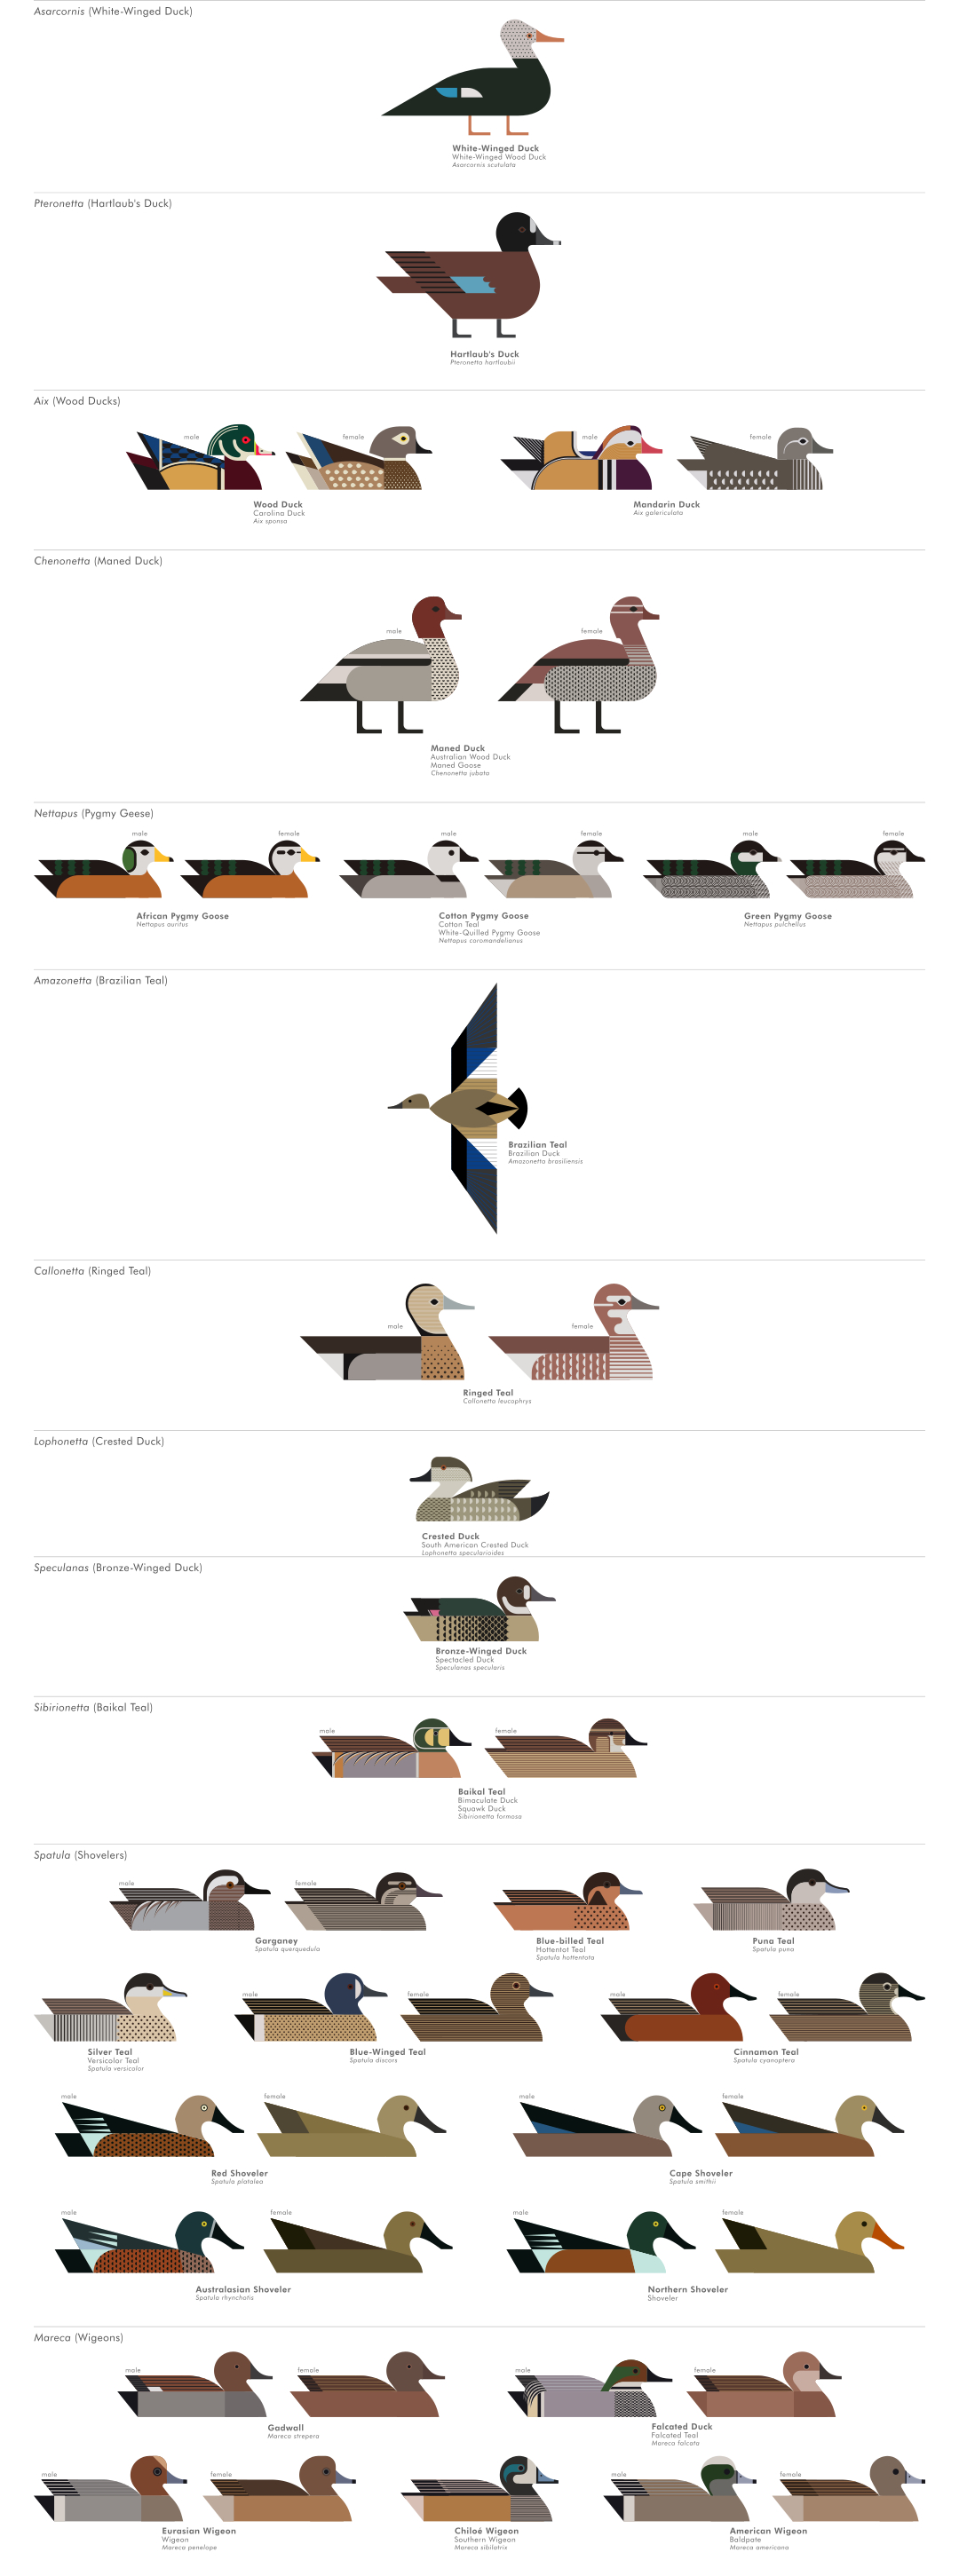 scott partridge - ave - avian vector encyclopedia - dabbling ducks - bird vector art